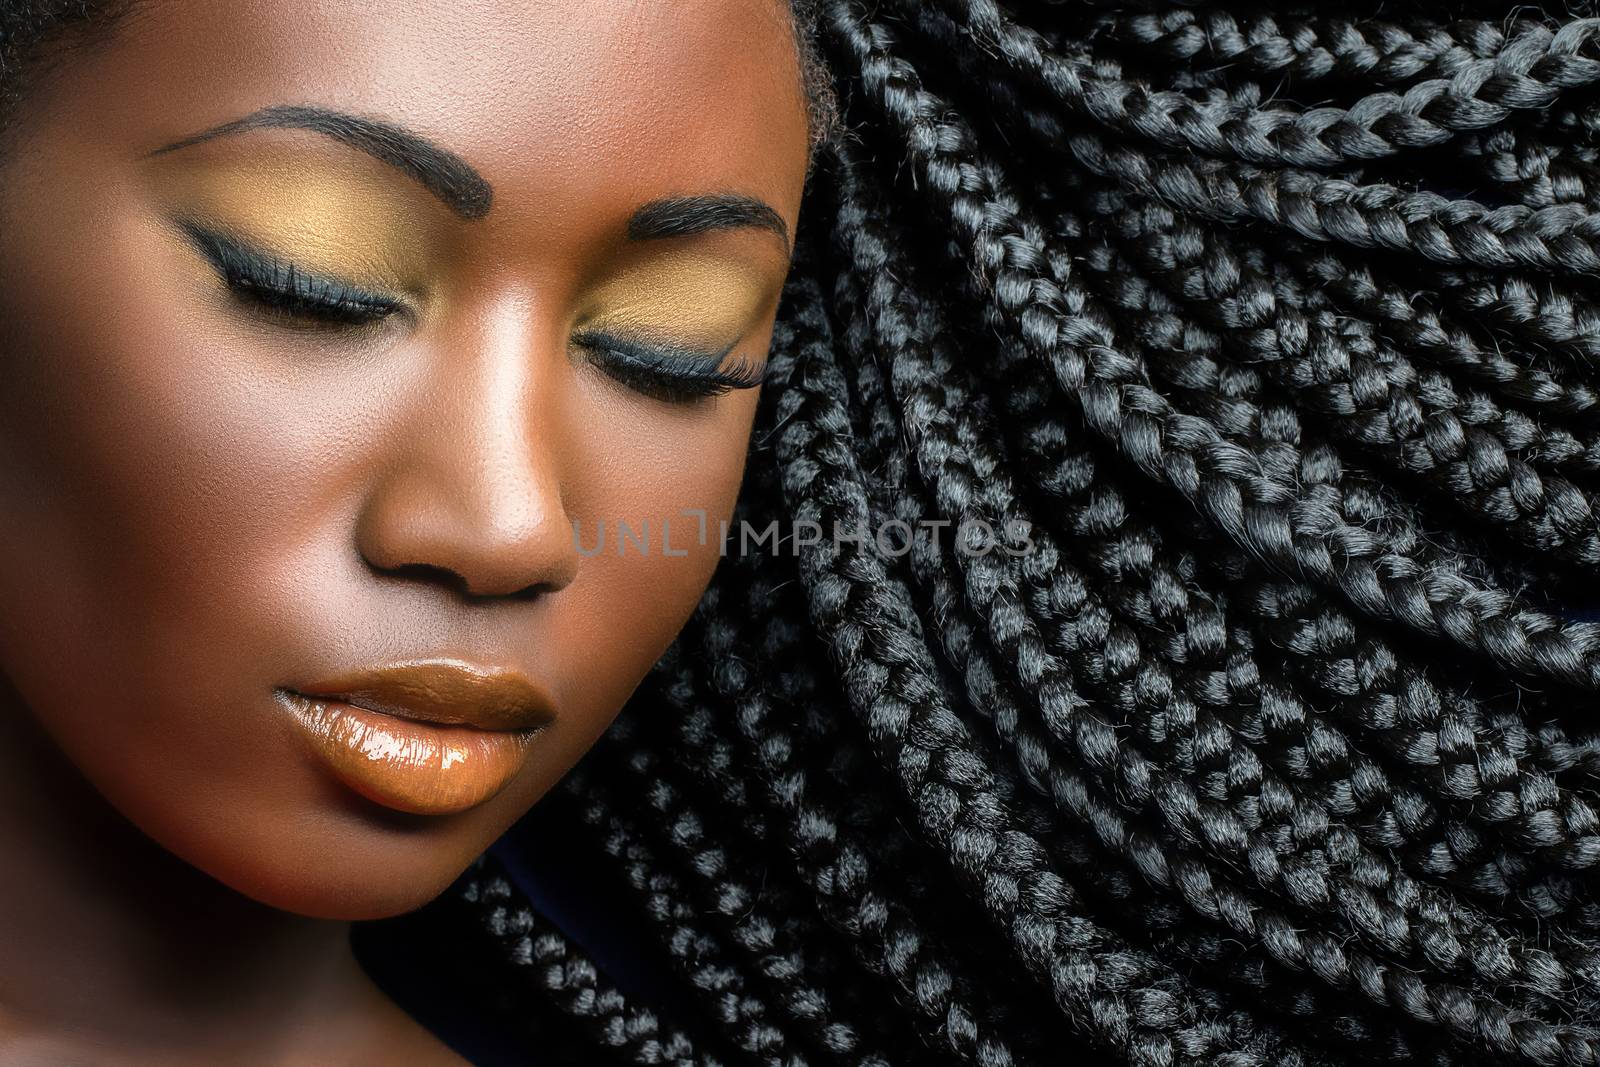 Dark girl beauty portrait with braids. by karelnoppe